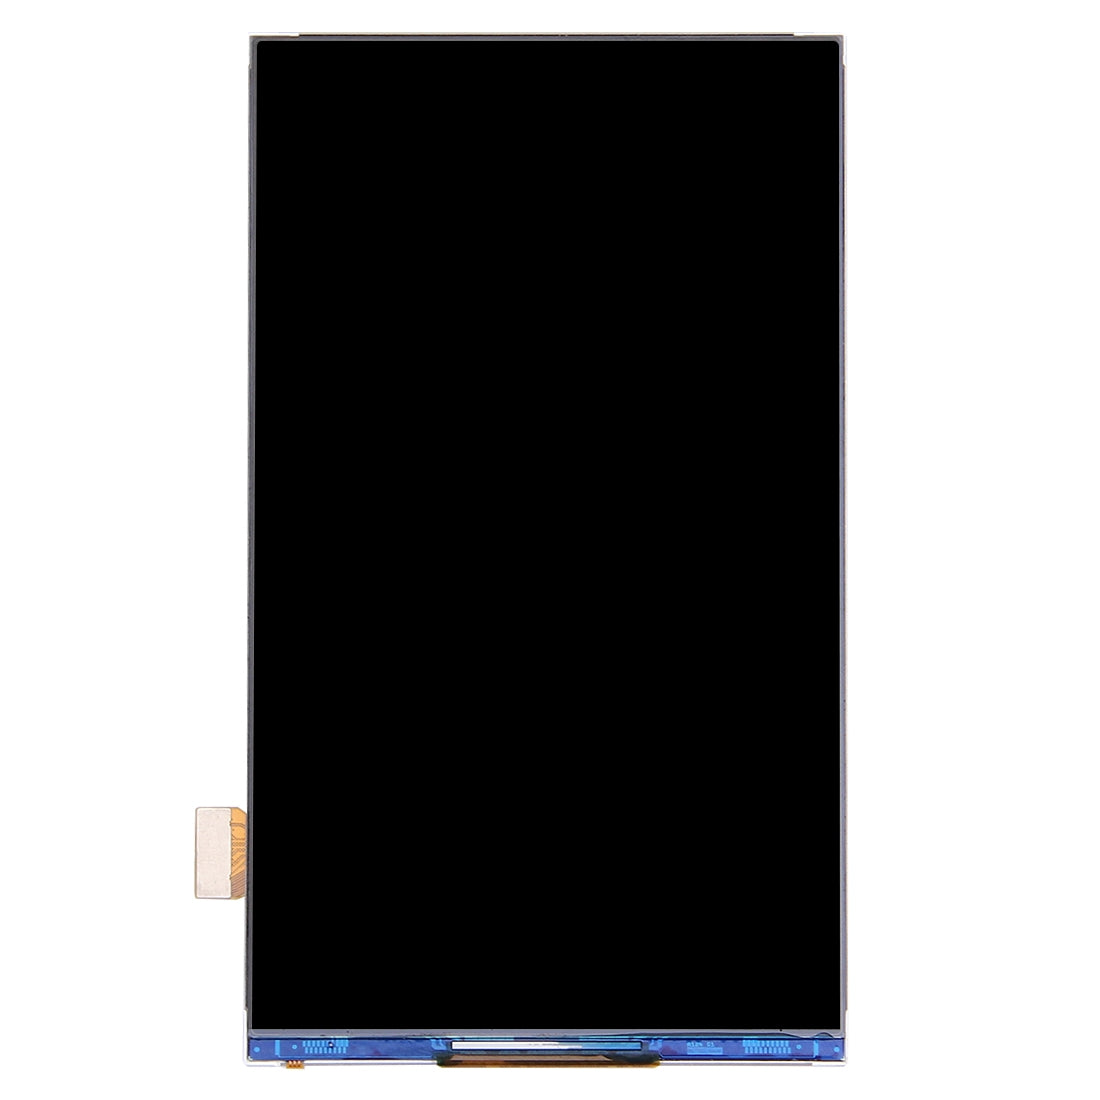 LCD Screen Internal Display Samsung Galaxy Grand Max G7200